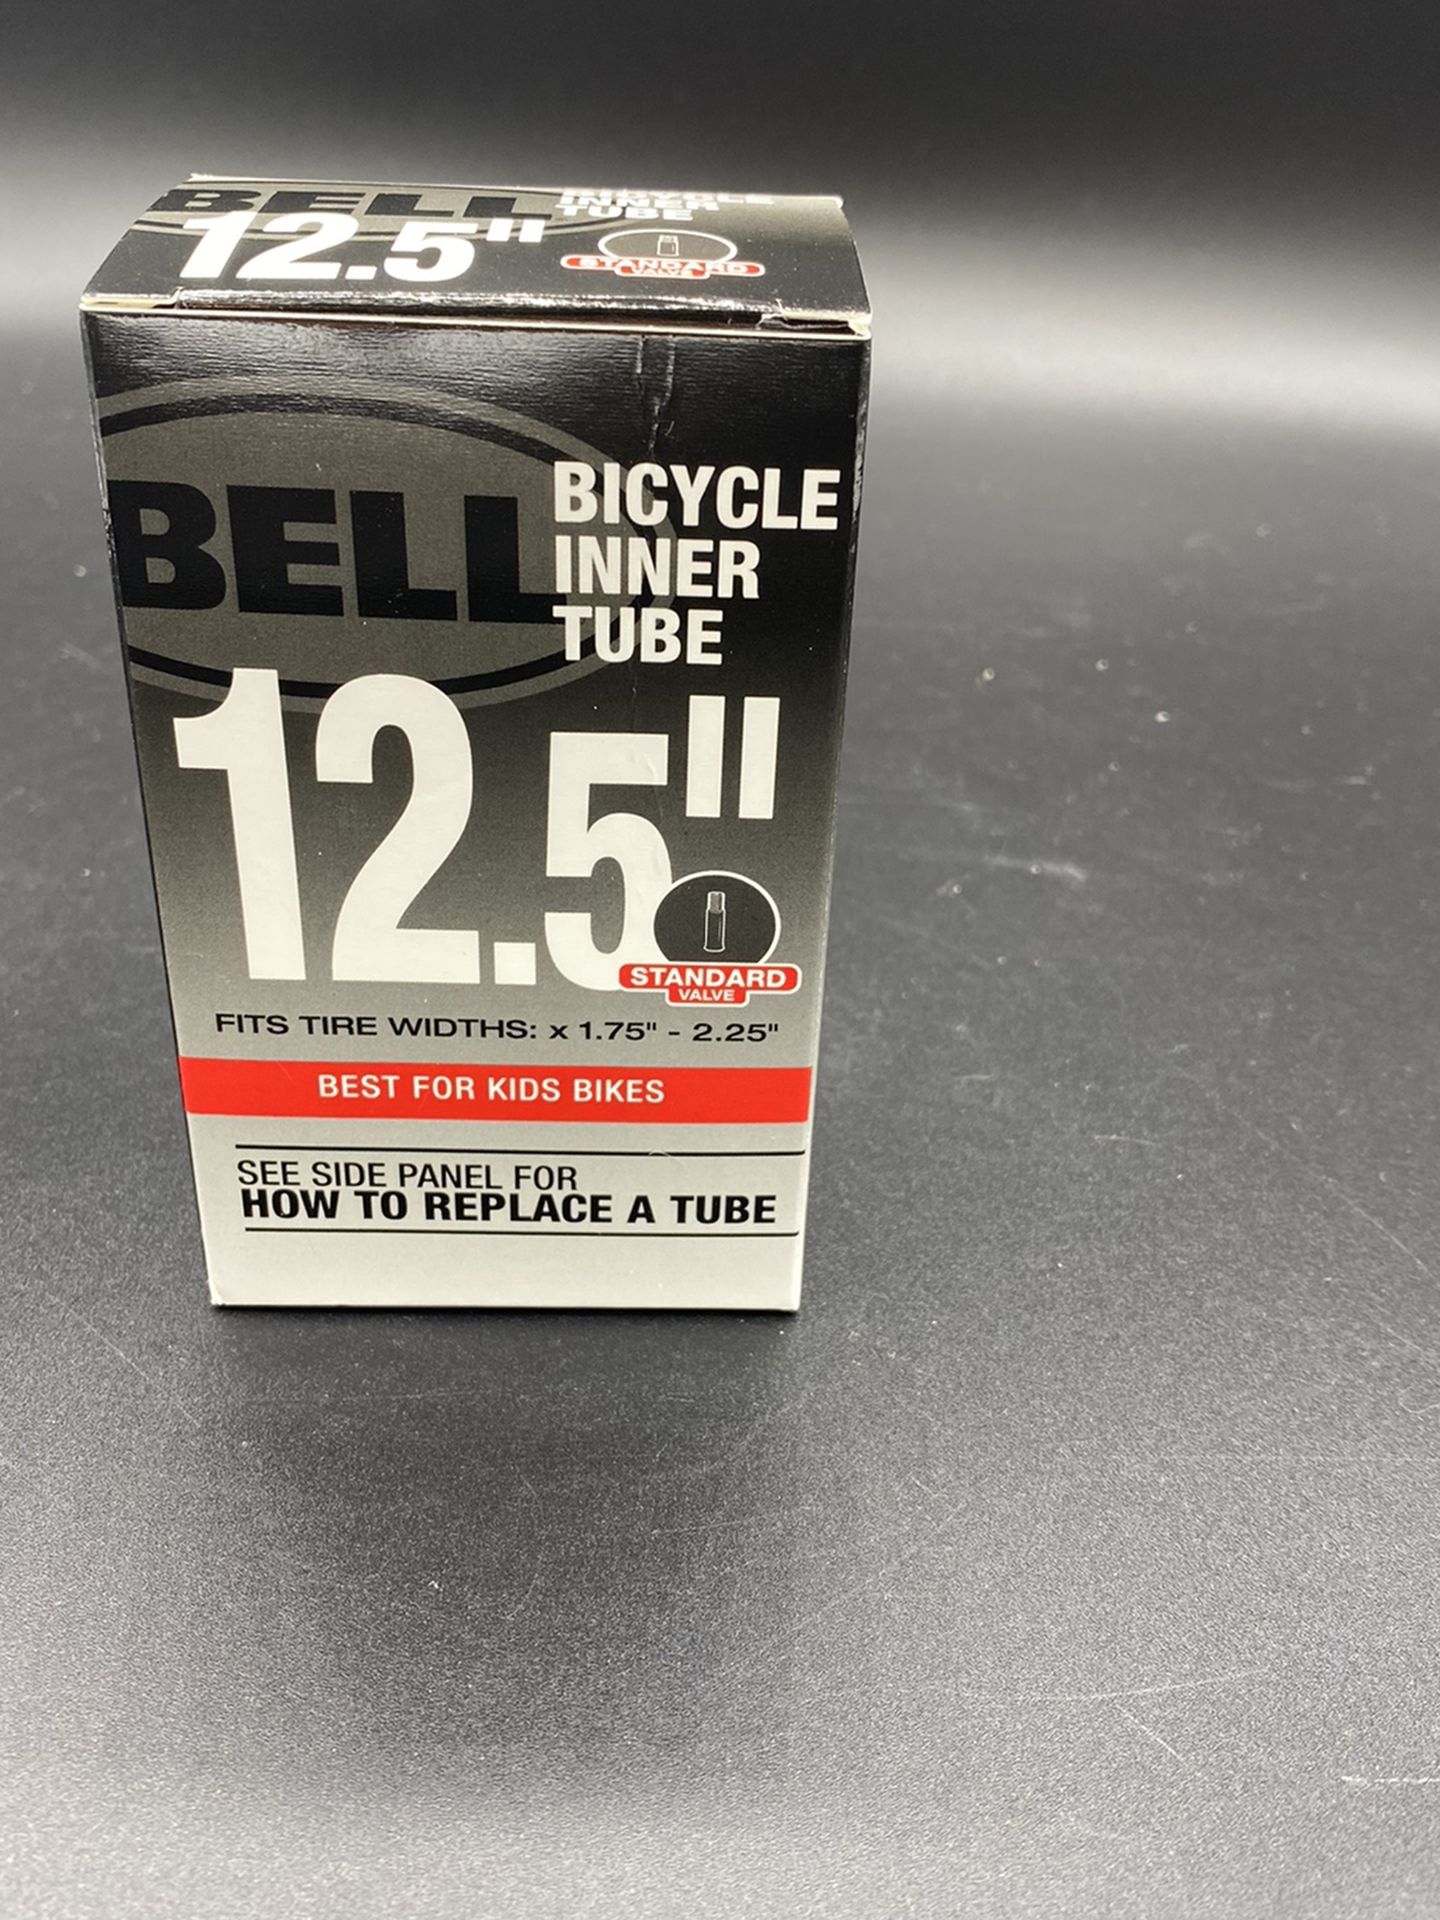 Bell Bicycle Inner Tube 12.5" x 1.75 - 2.25 Tire Kids Bike Standard 035011889337